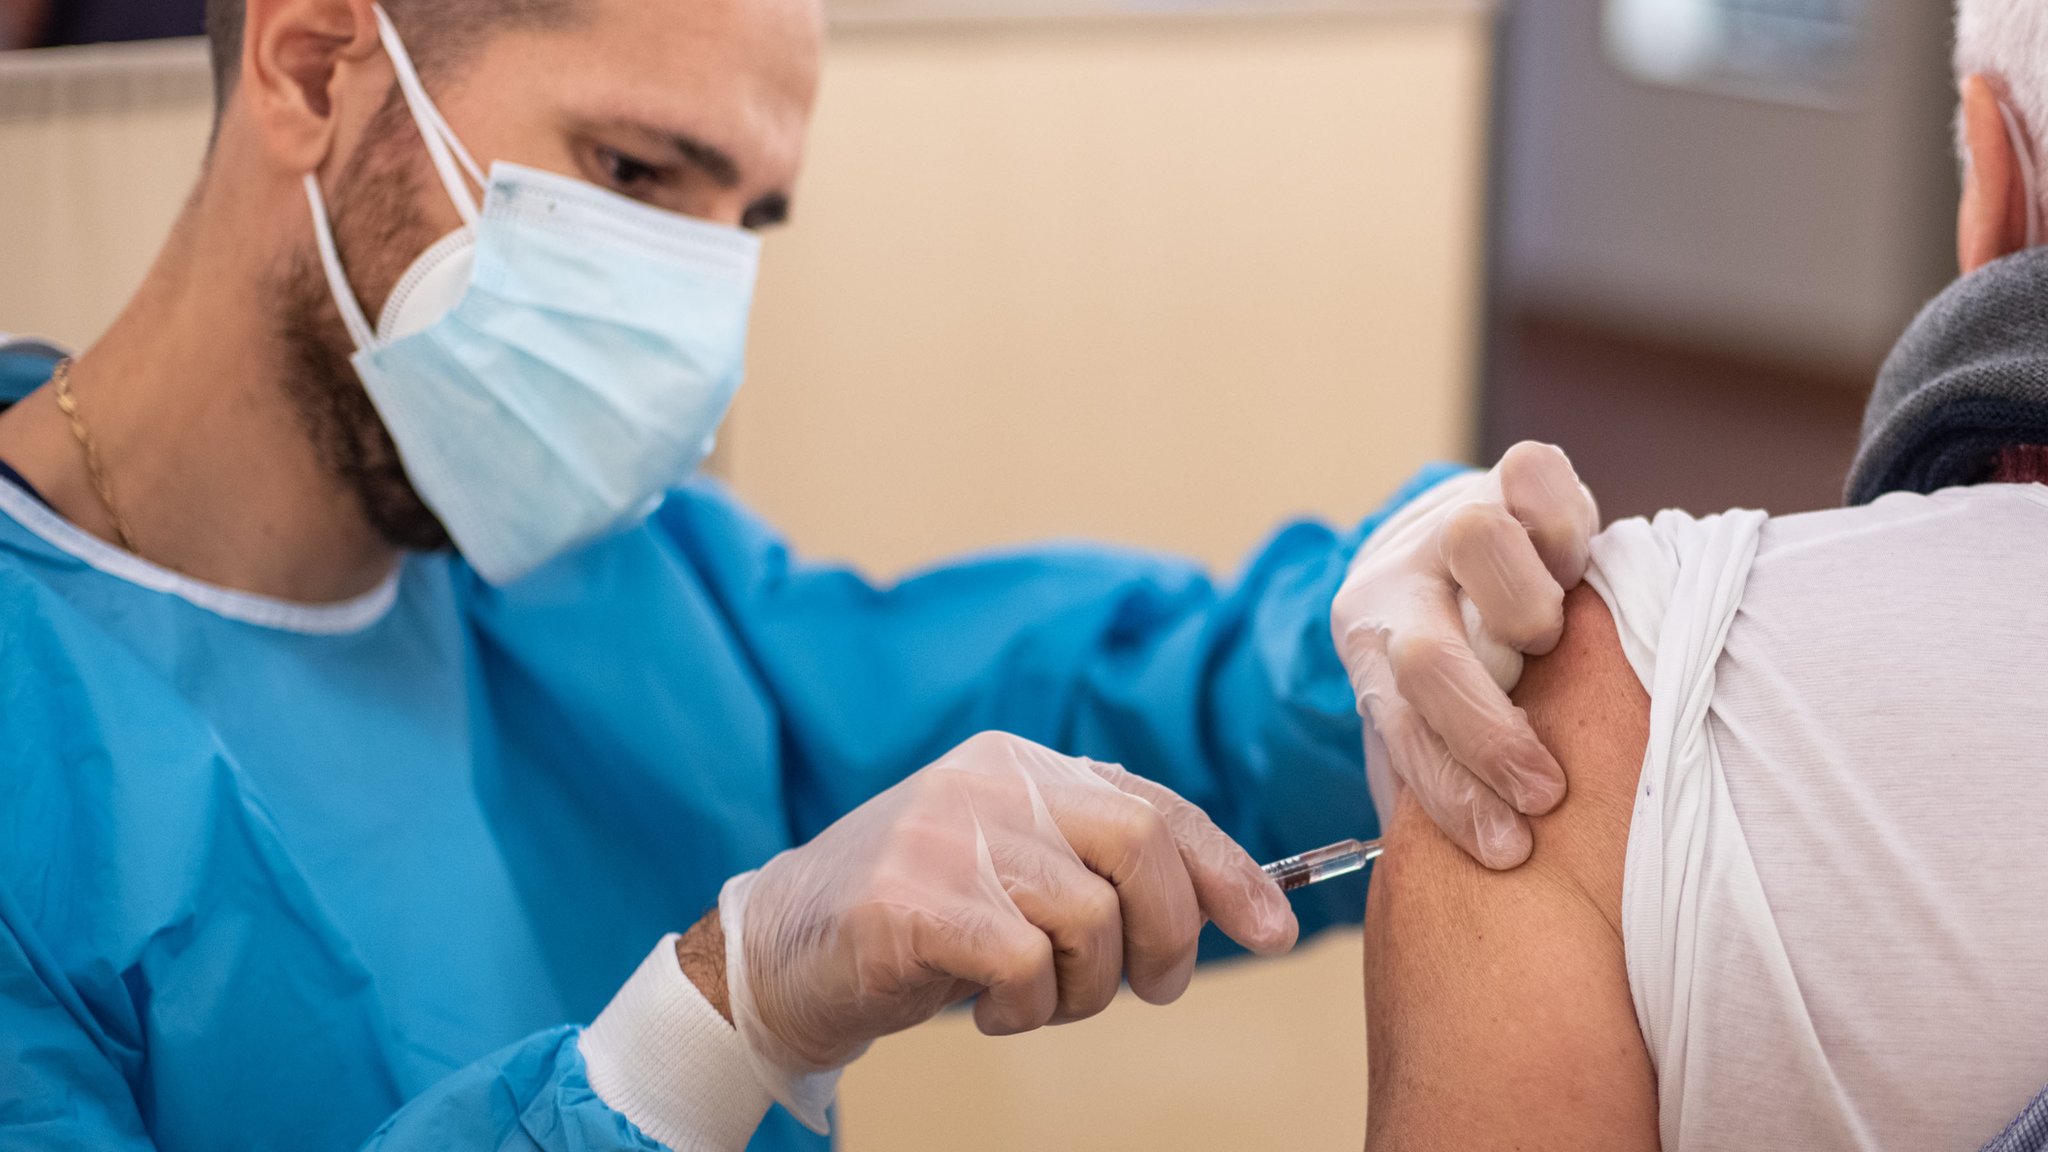 Covid vaccine: First 'milestone' vaccine offers 90% protection - BBC News